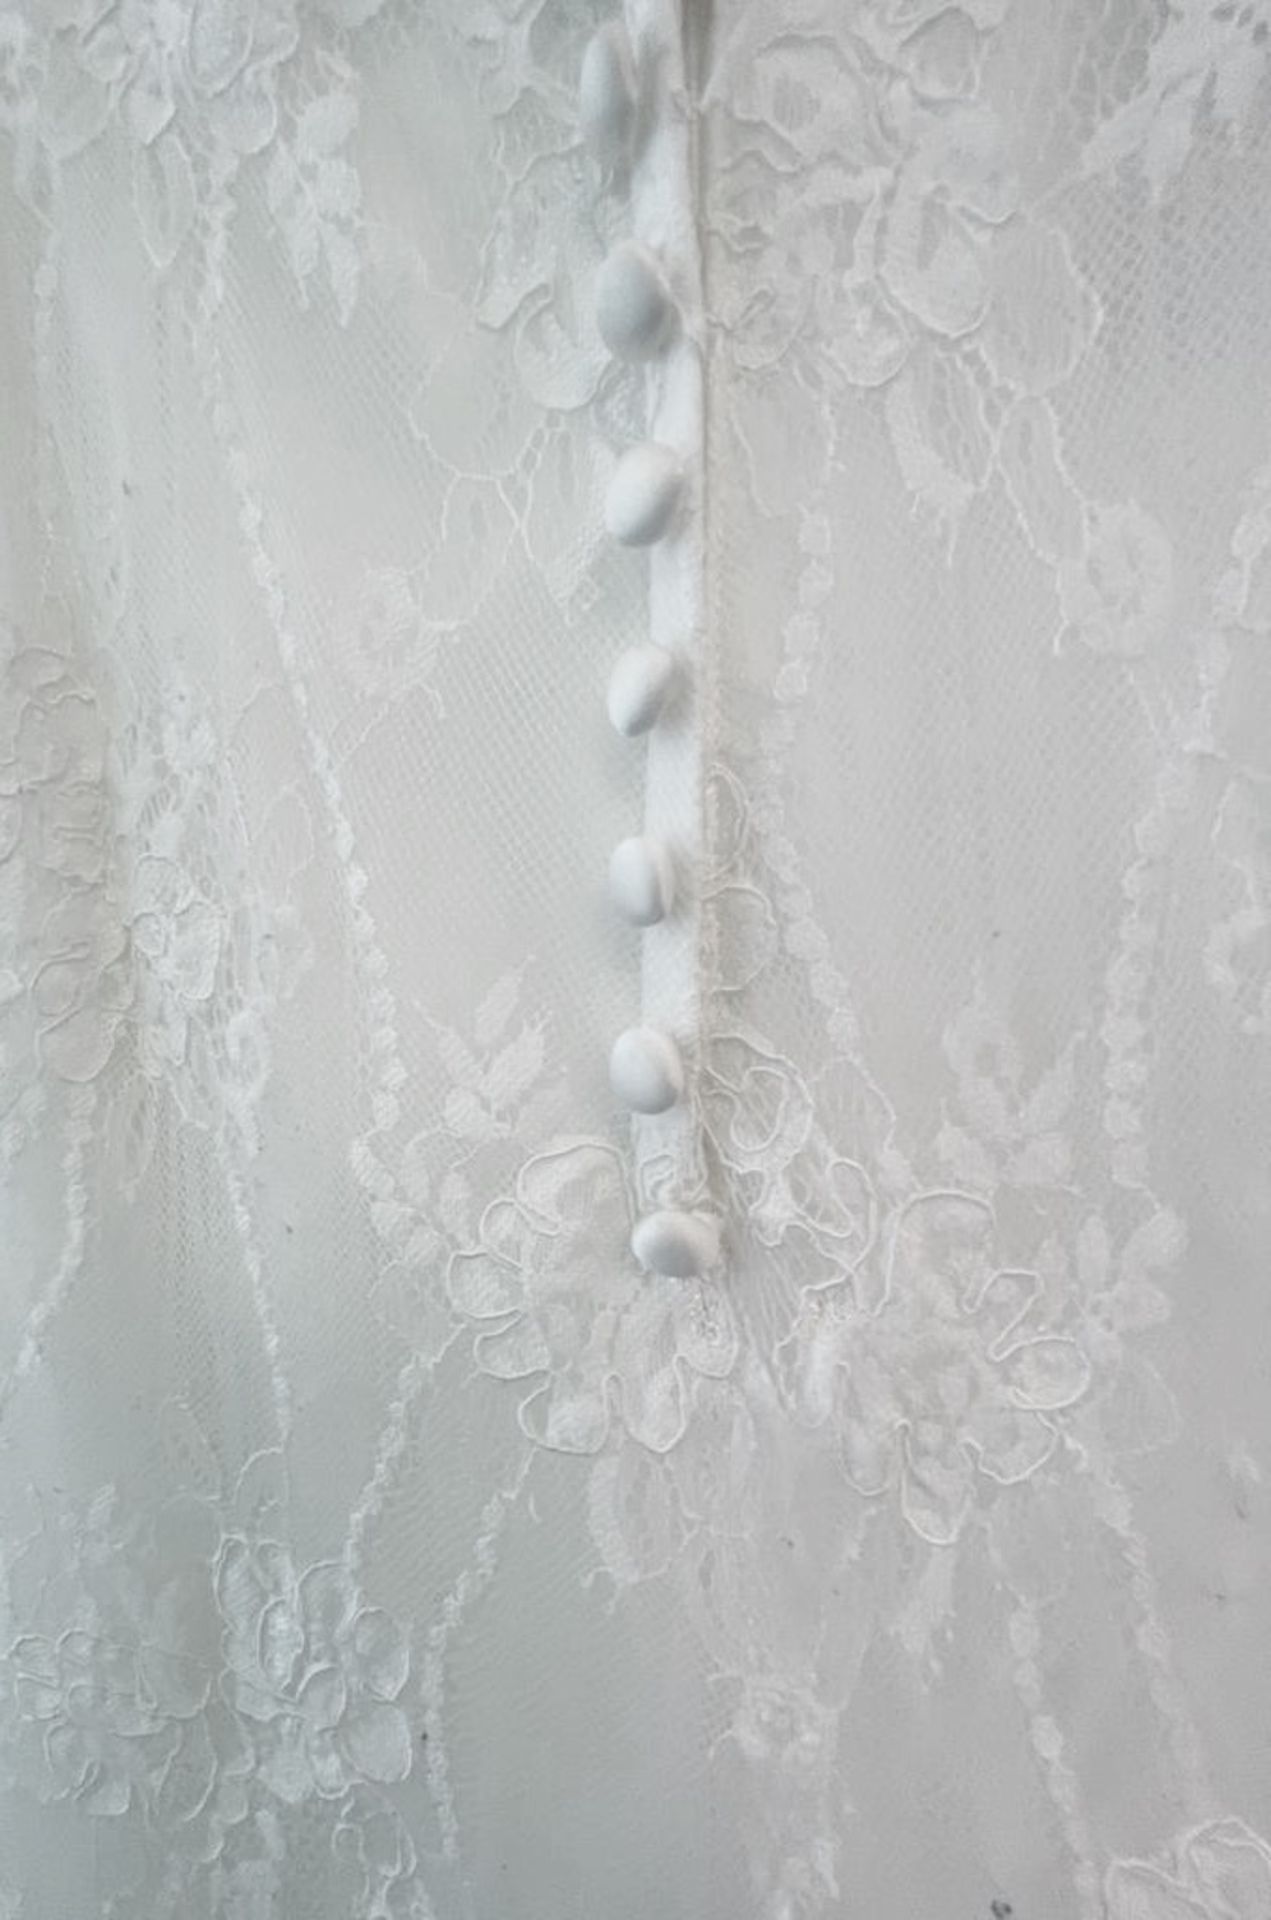 1 x DIANE LEGRAND Designer Fishtail Wedding Dress Bridal Gown - Style: 7209 - Size: UK 10 - Original - Image 3 of 10